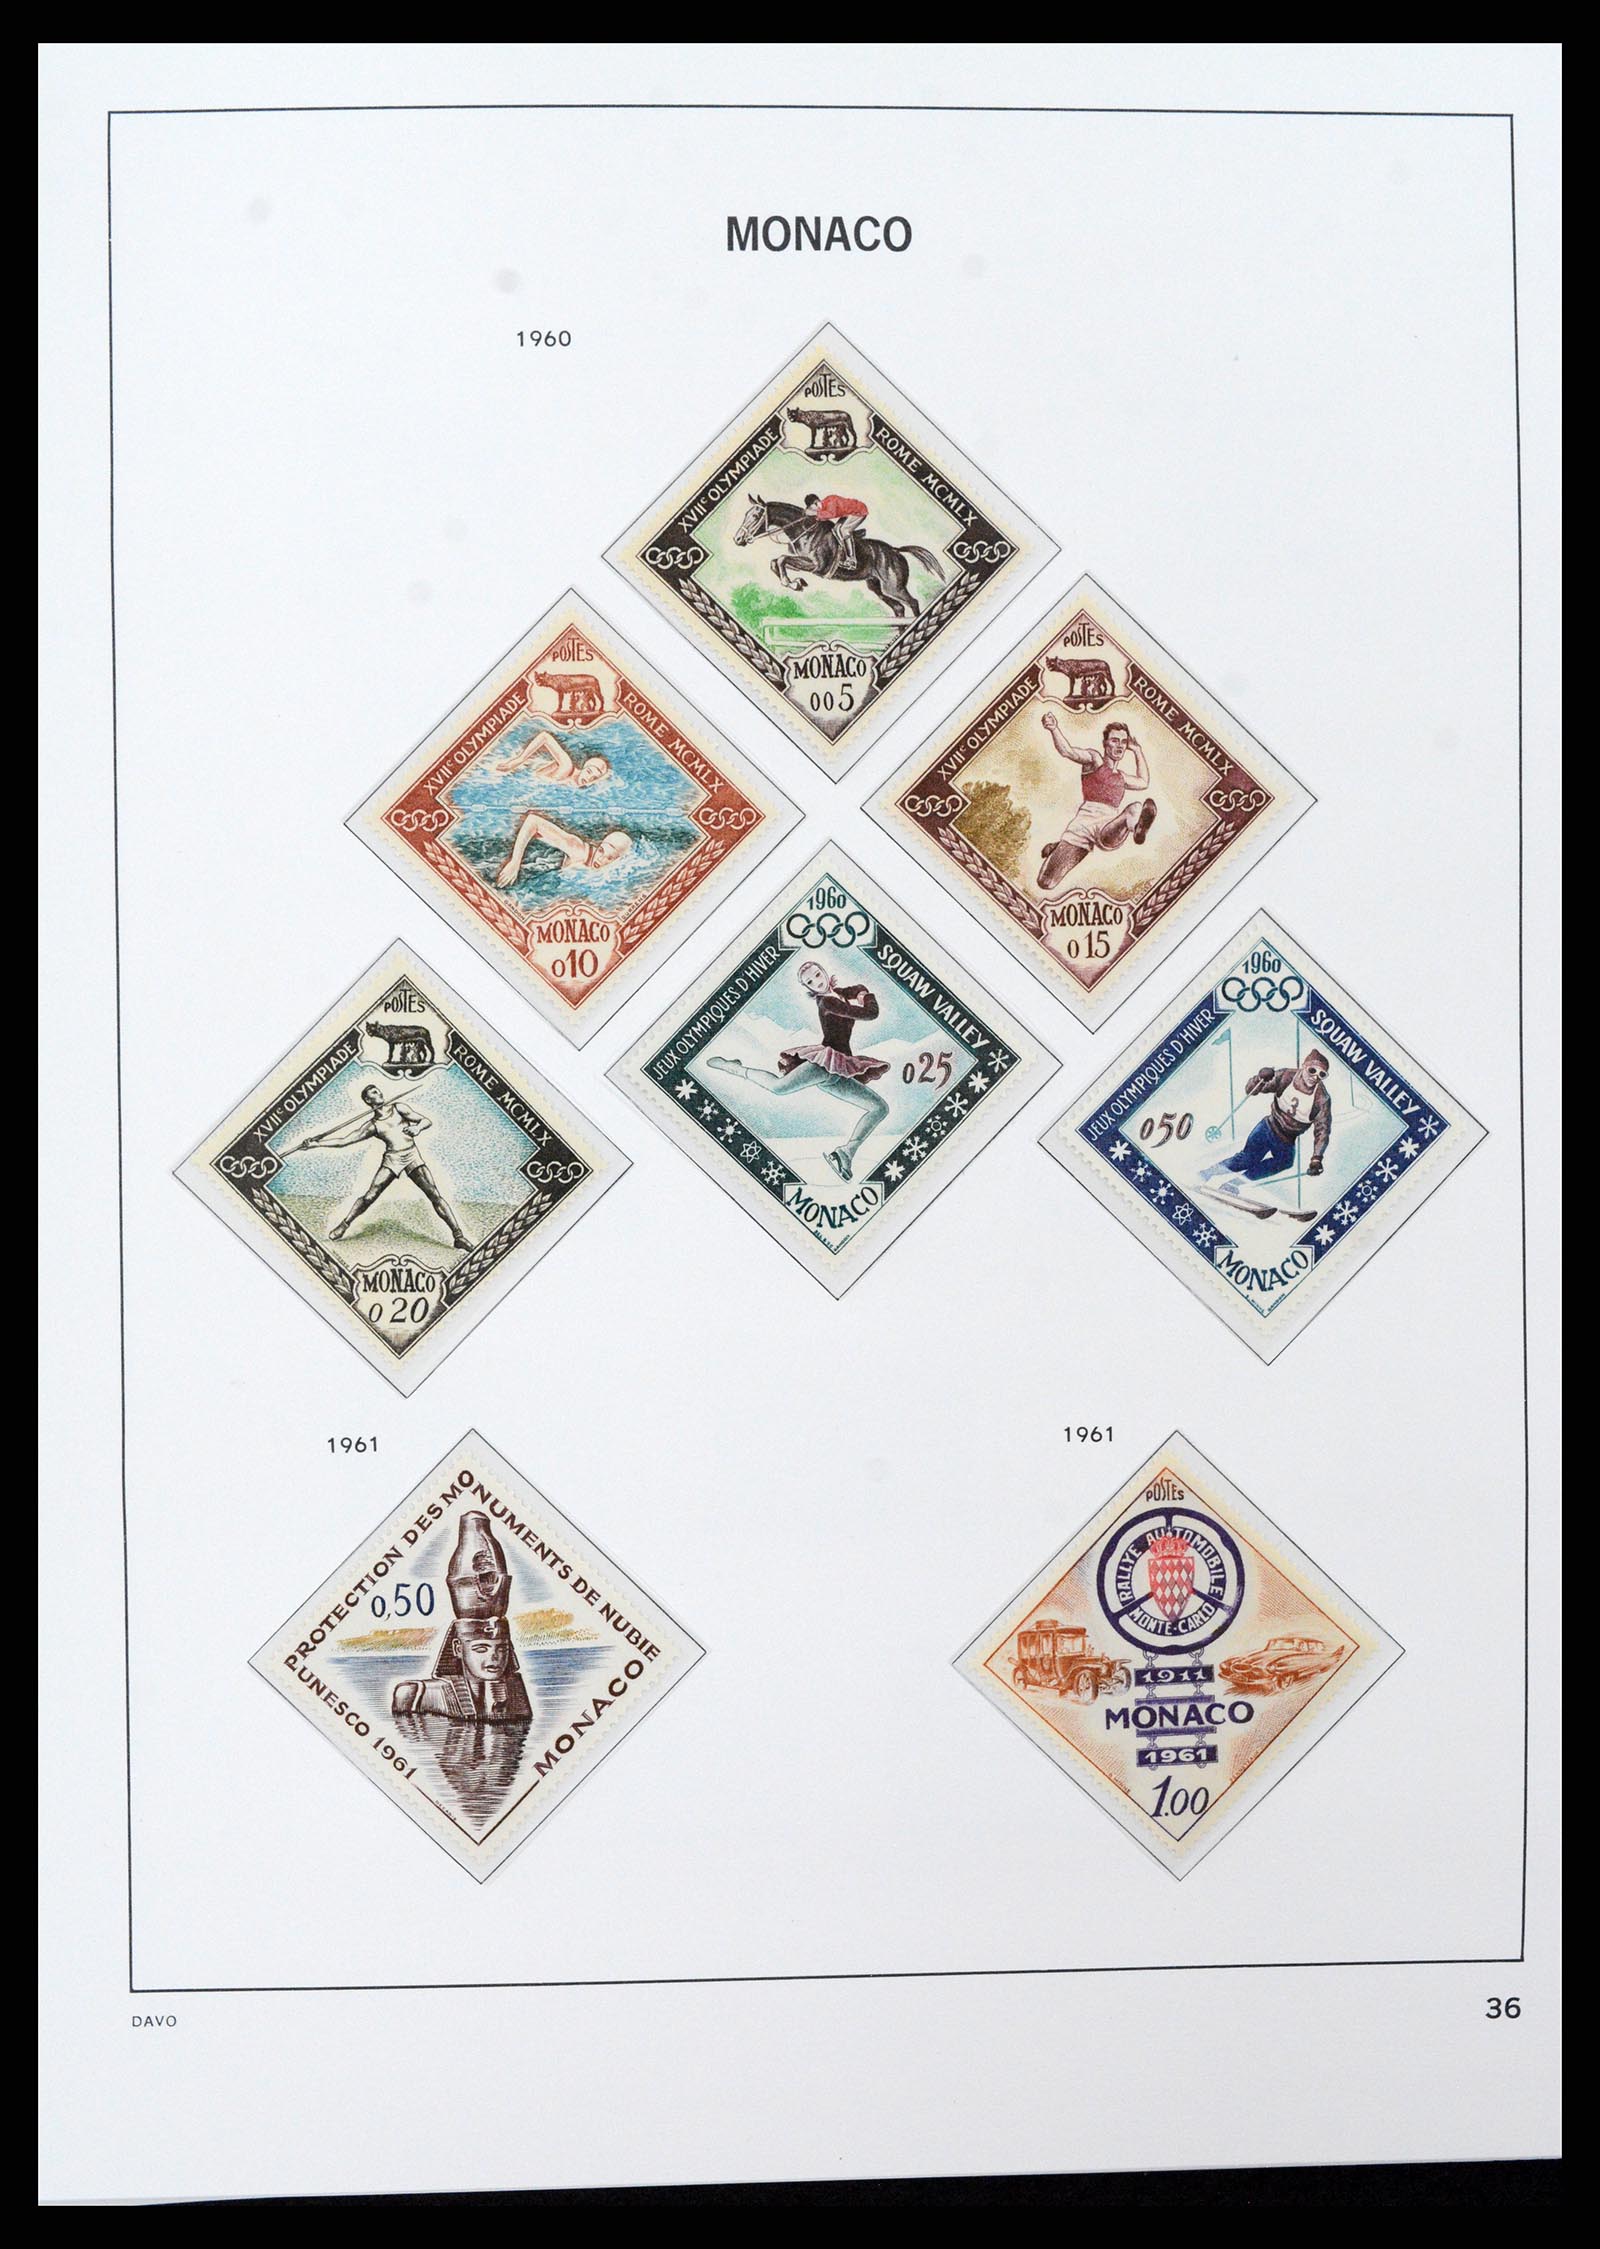 37279 036 - Stamp collection 37279 Monaco 1885-1969.